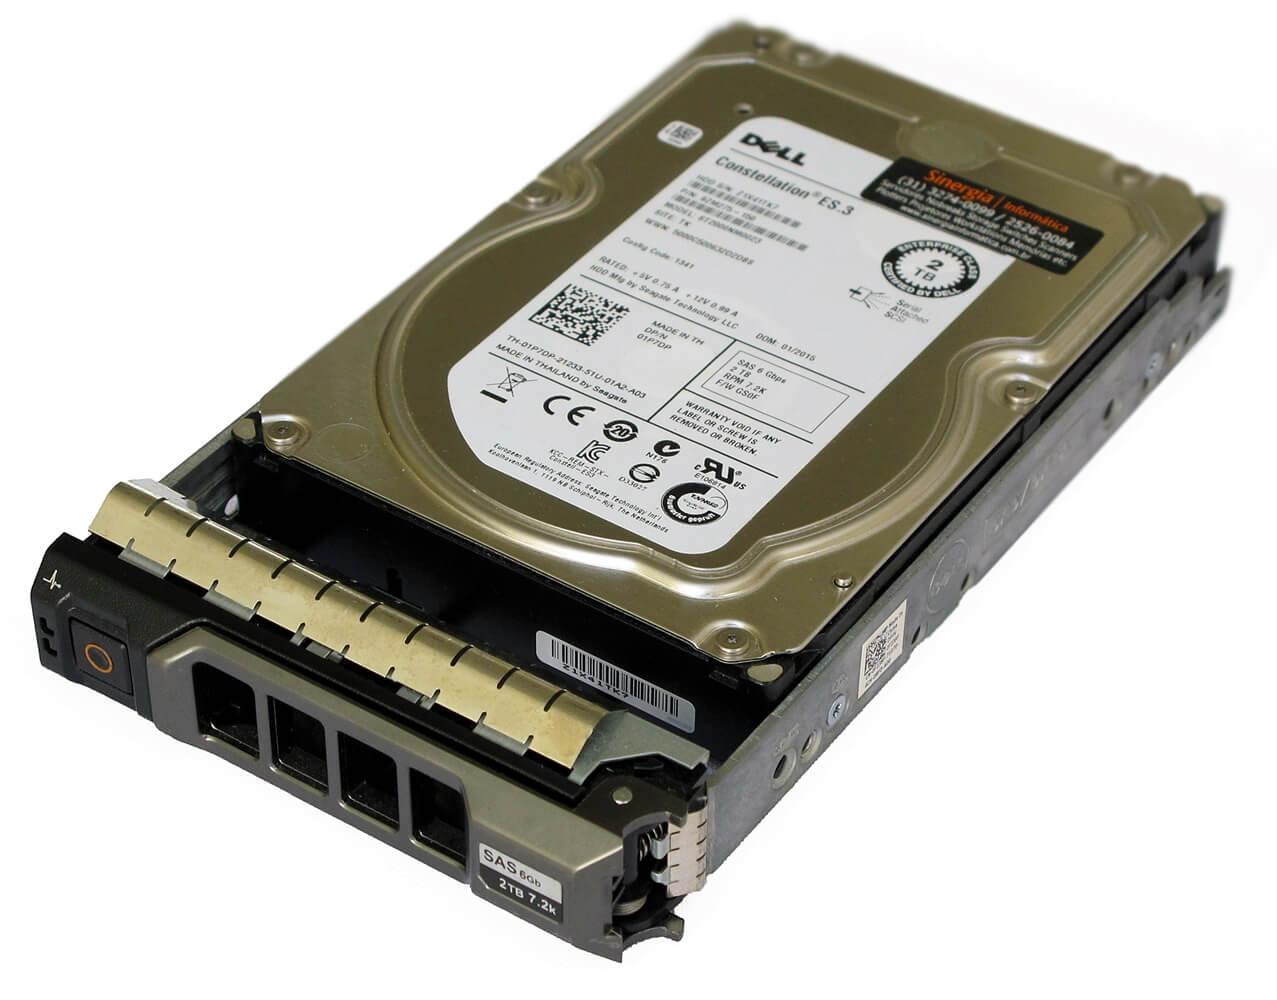 ST2000NM0023 HD Dell 2TB SAS 6 Gbps 7.2K RPM LFF 3.5" para Storage Dell MD3200 Model pronta entrega